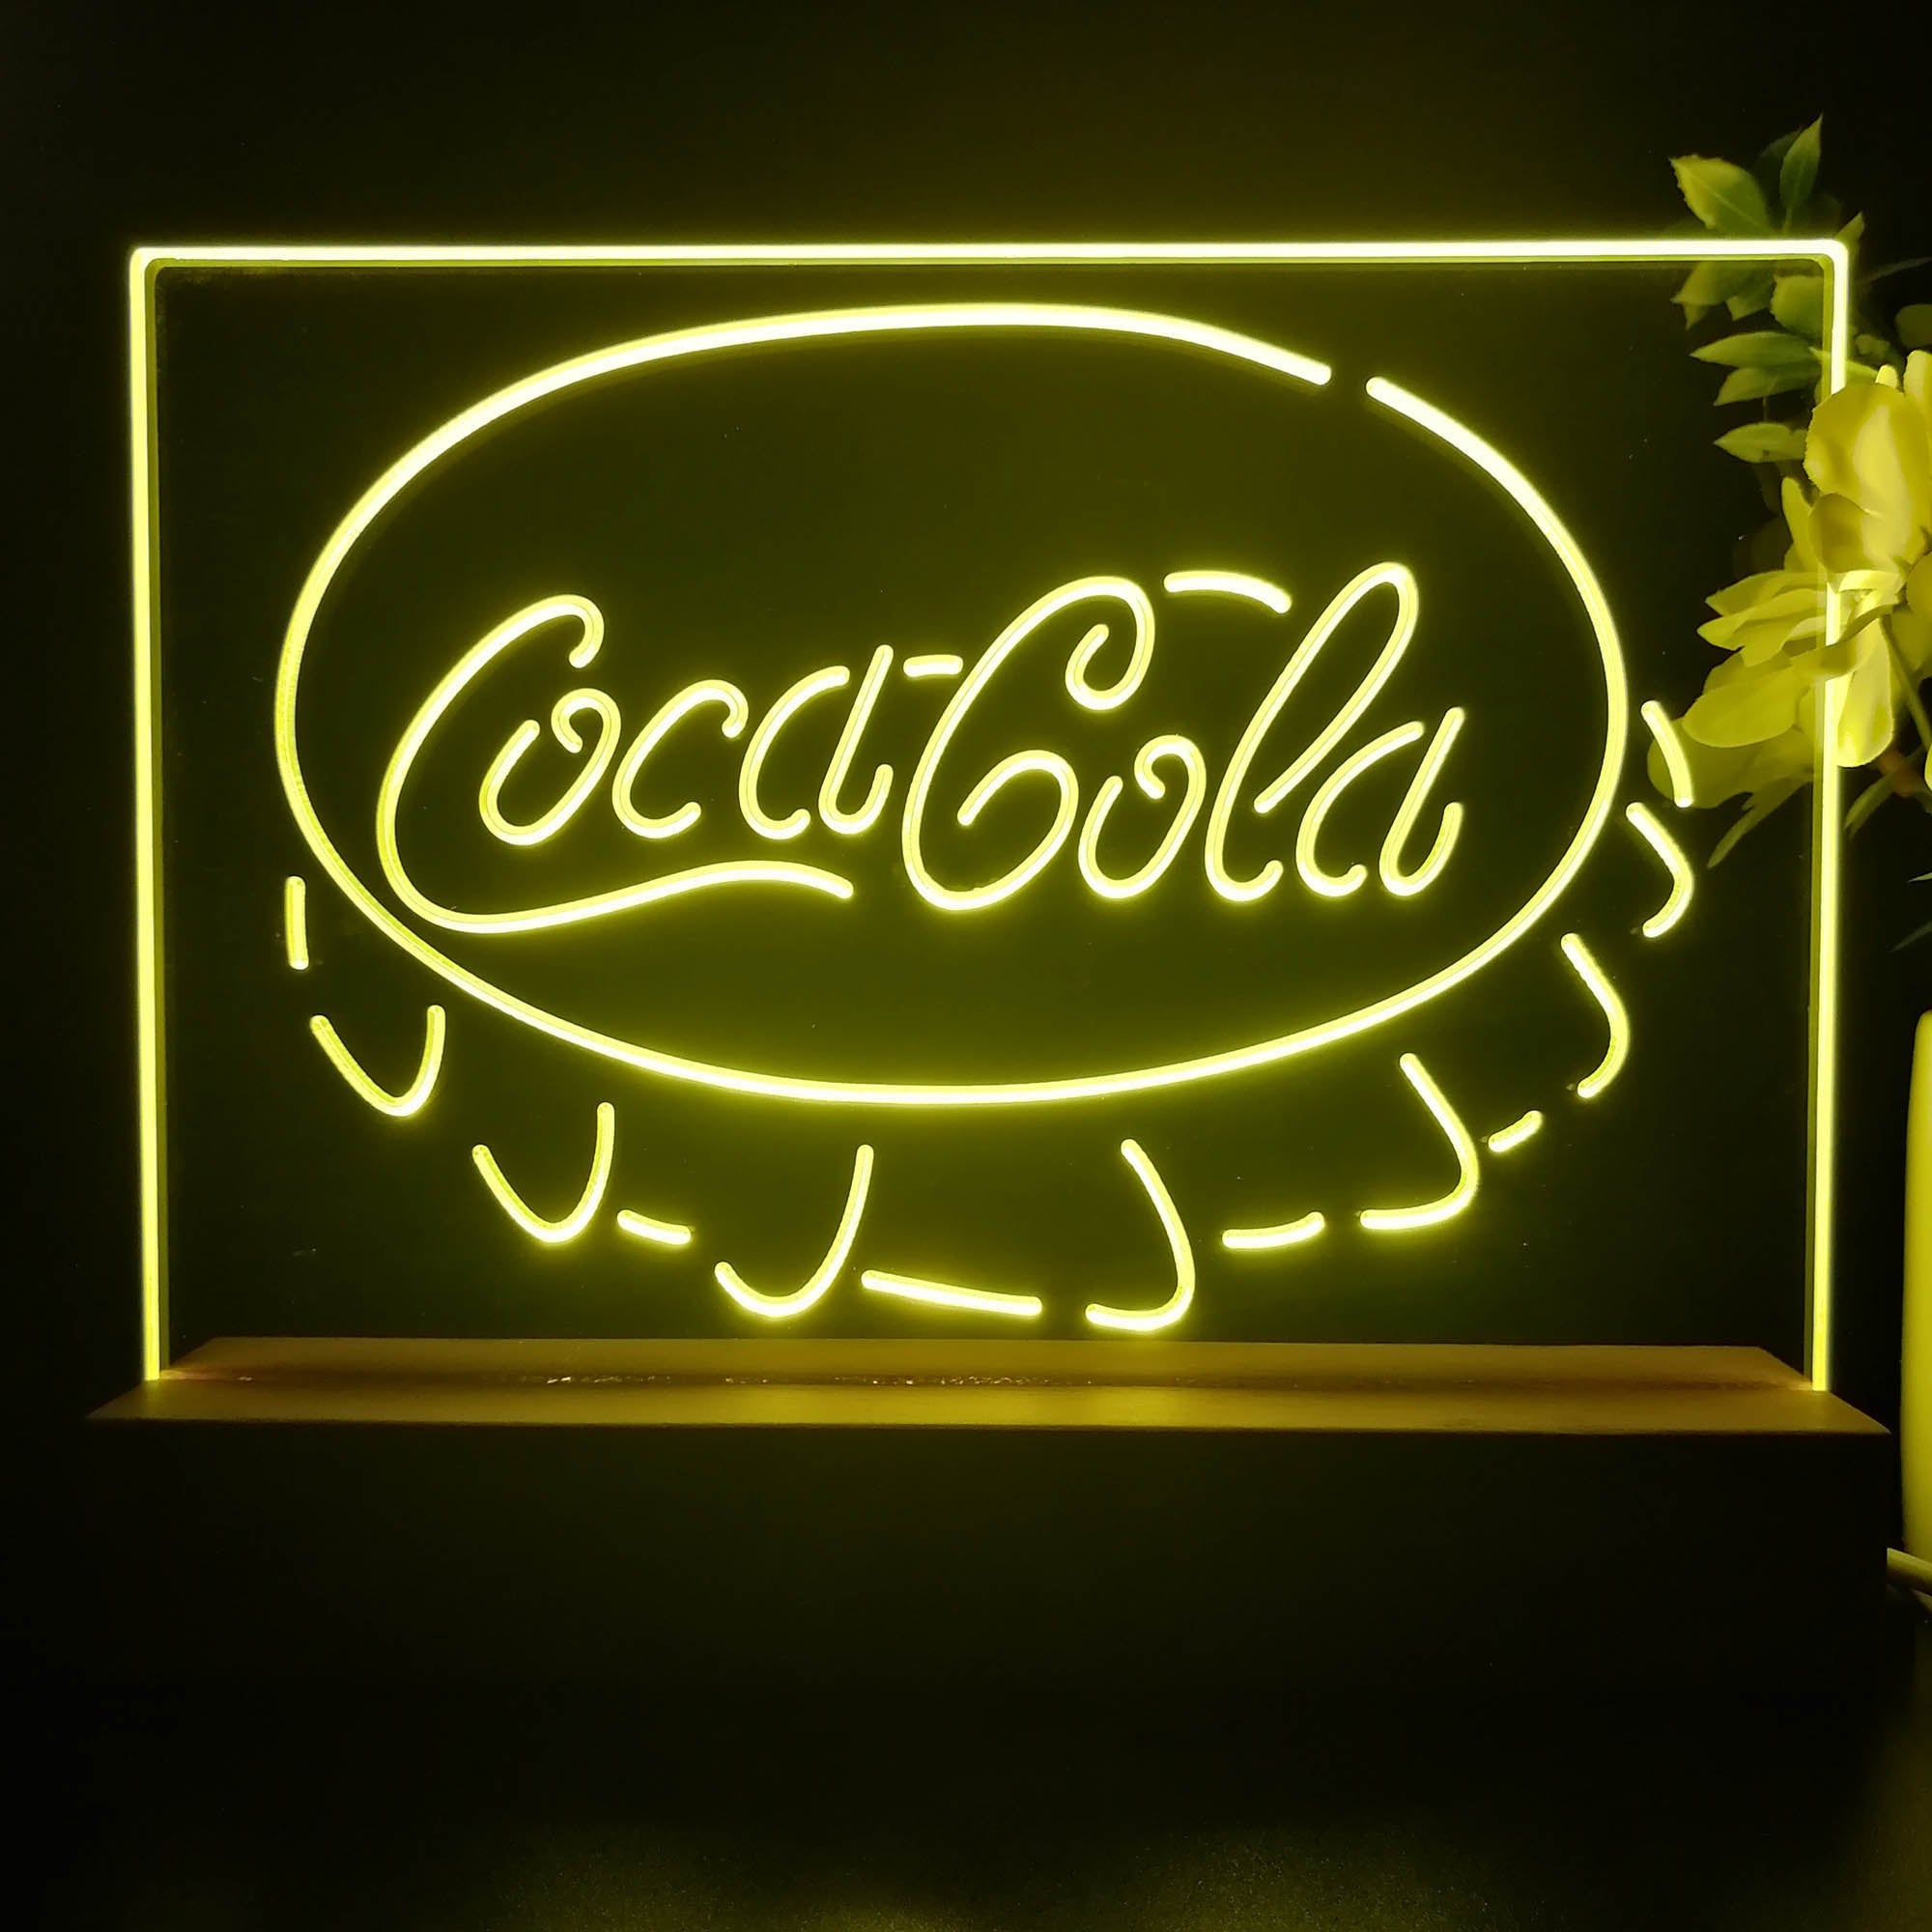 Coca Cola Bottle Cap Bar Neon Sign Pub Bar Lamp